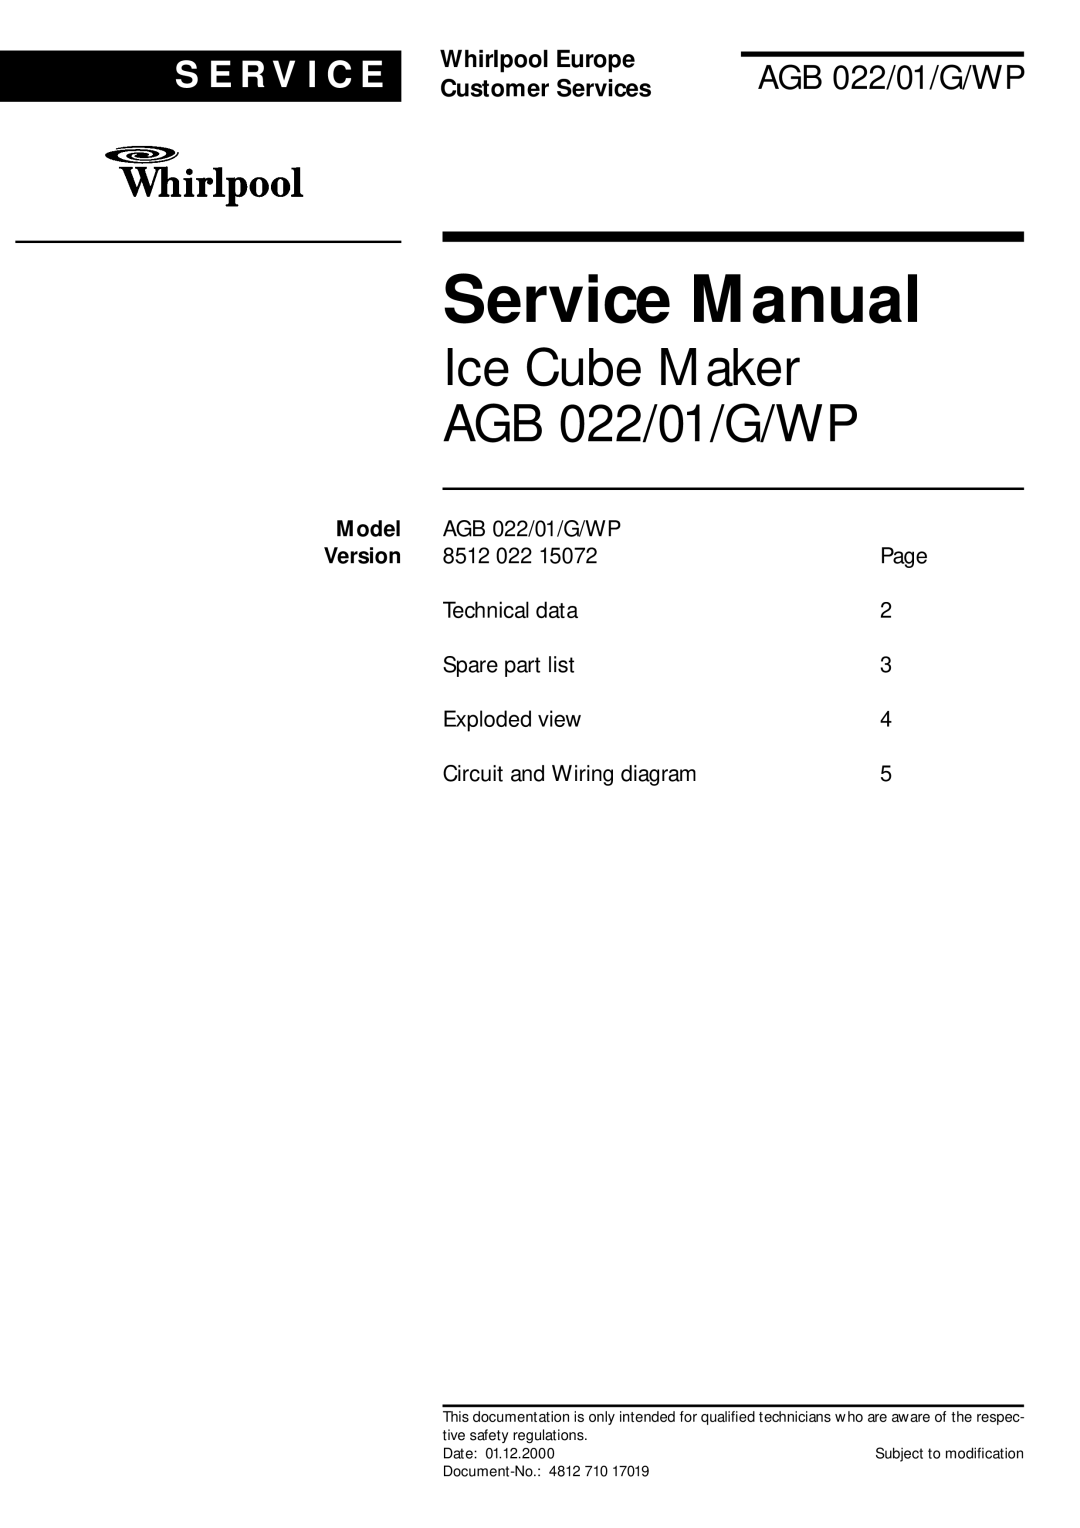 Whirlpool AKM 460 NB 1 service manual Model, Gas hob AKM 460/NB/01, S E R V I C E, Whirlpool Europe, Customer Services 